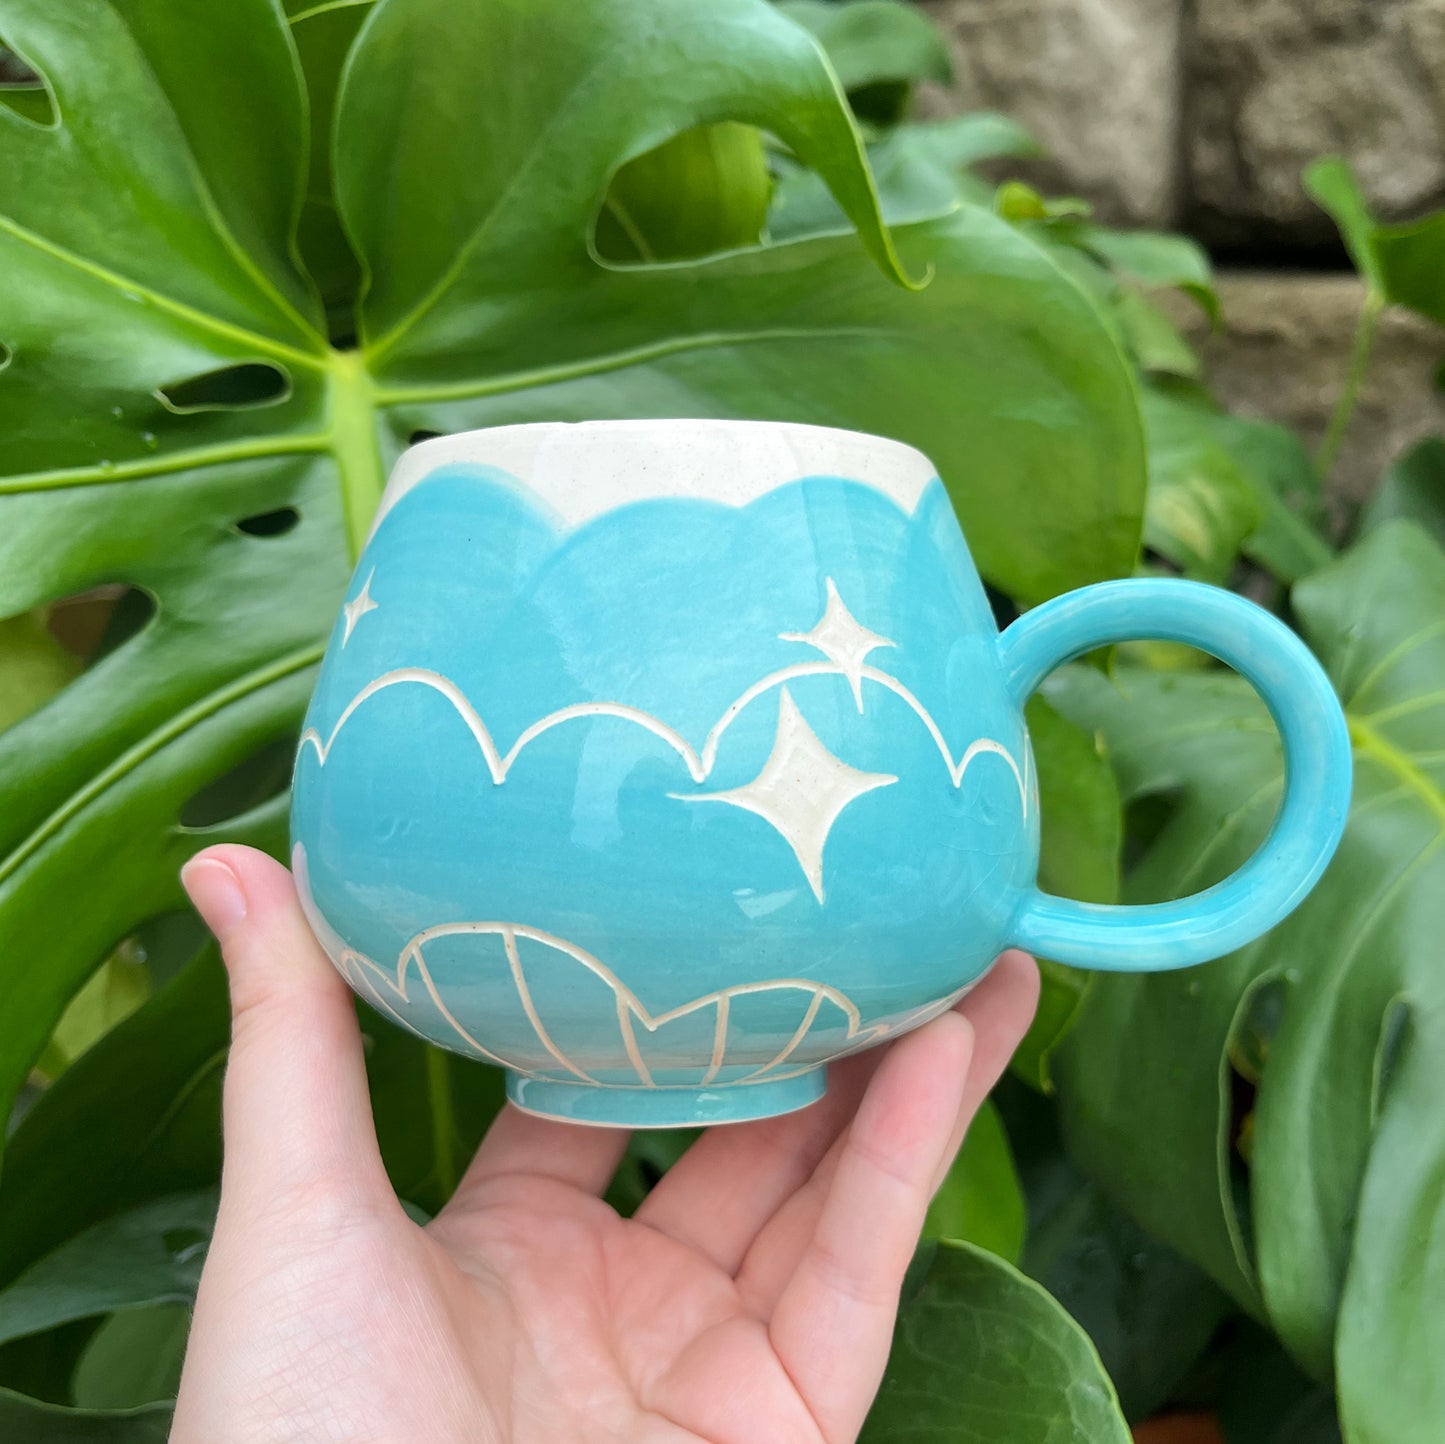 Blue Cloud Bottom Mug